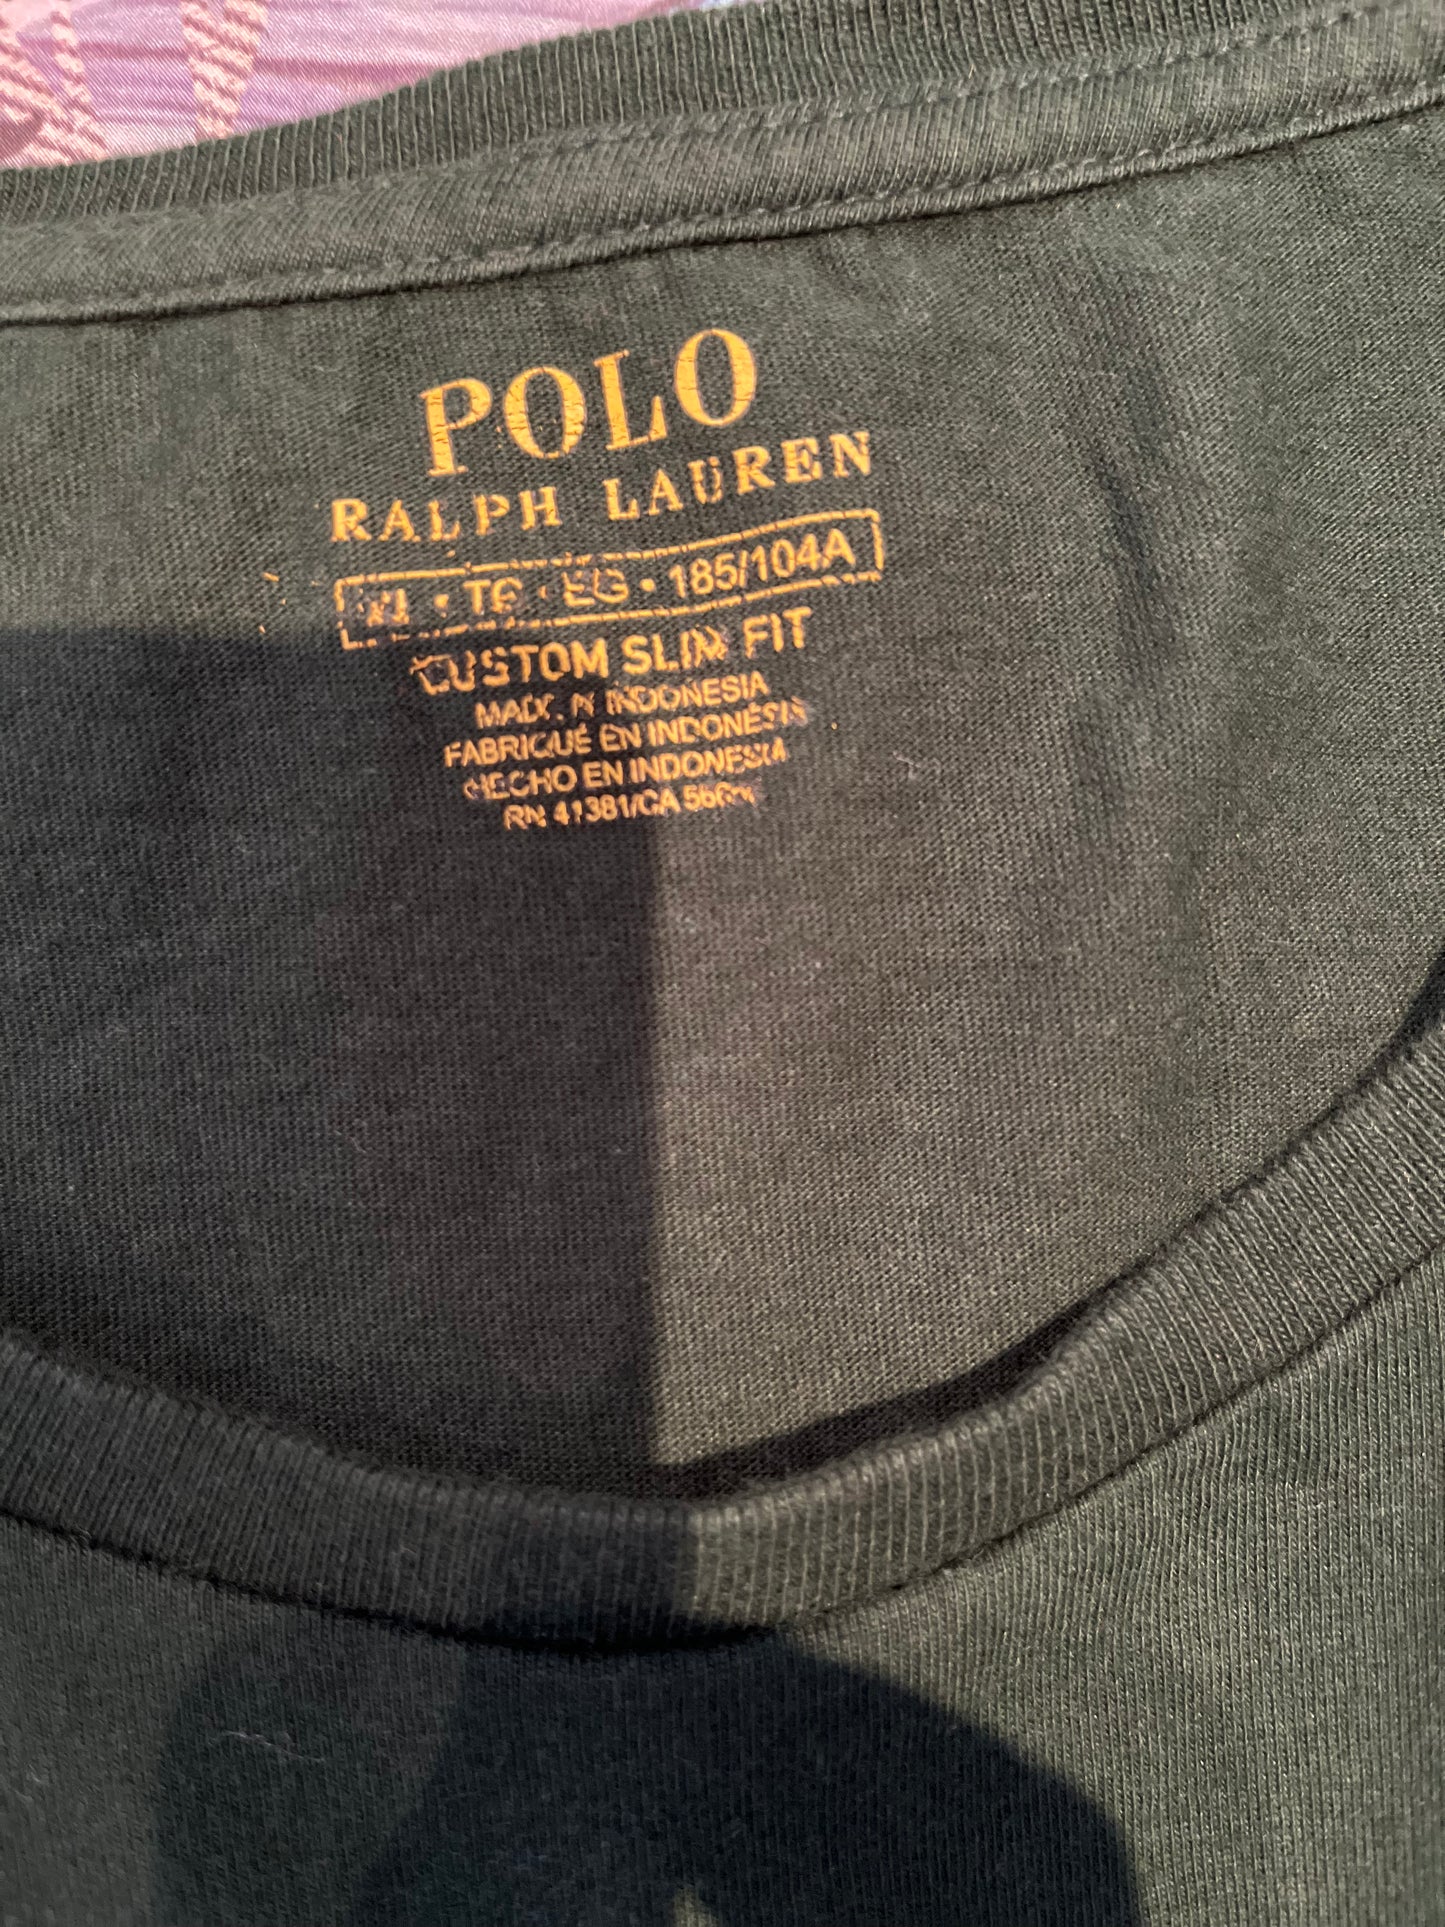 Ralph Lauren 100% Cotton area Logo Embroidered T Regular Fit Size XL